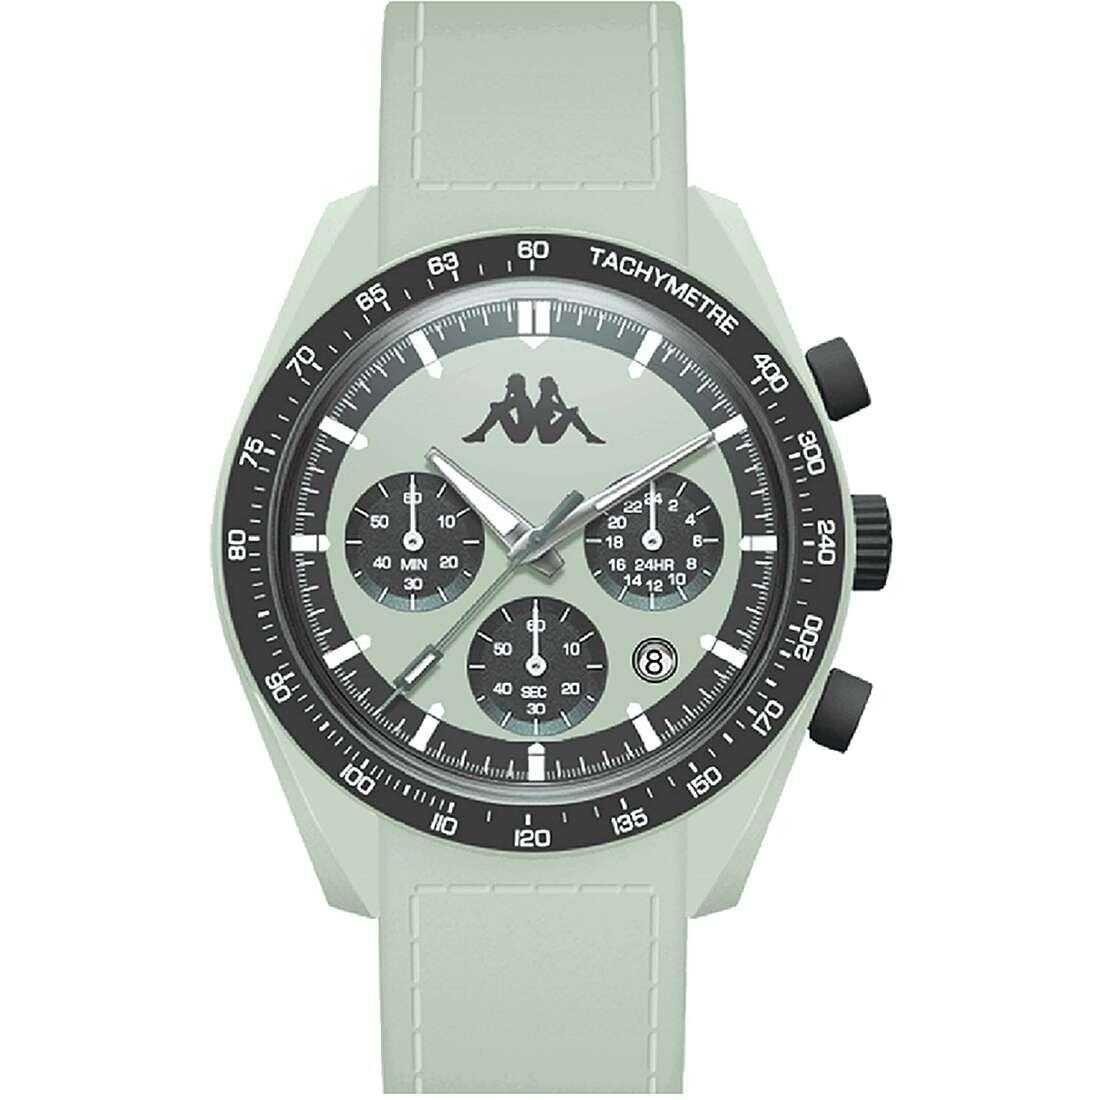 Aqua green 45mm case watch - KAPPA